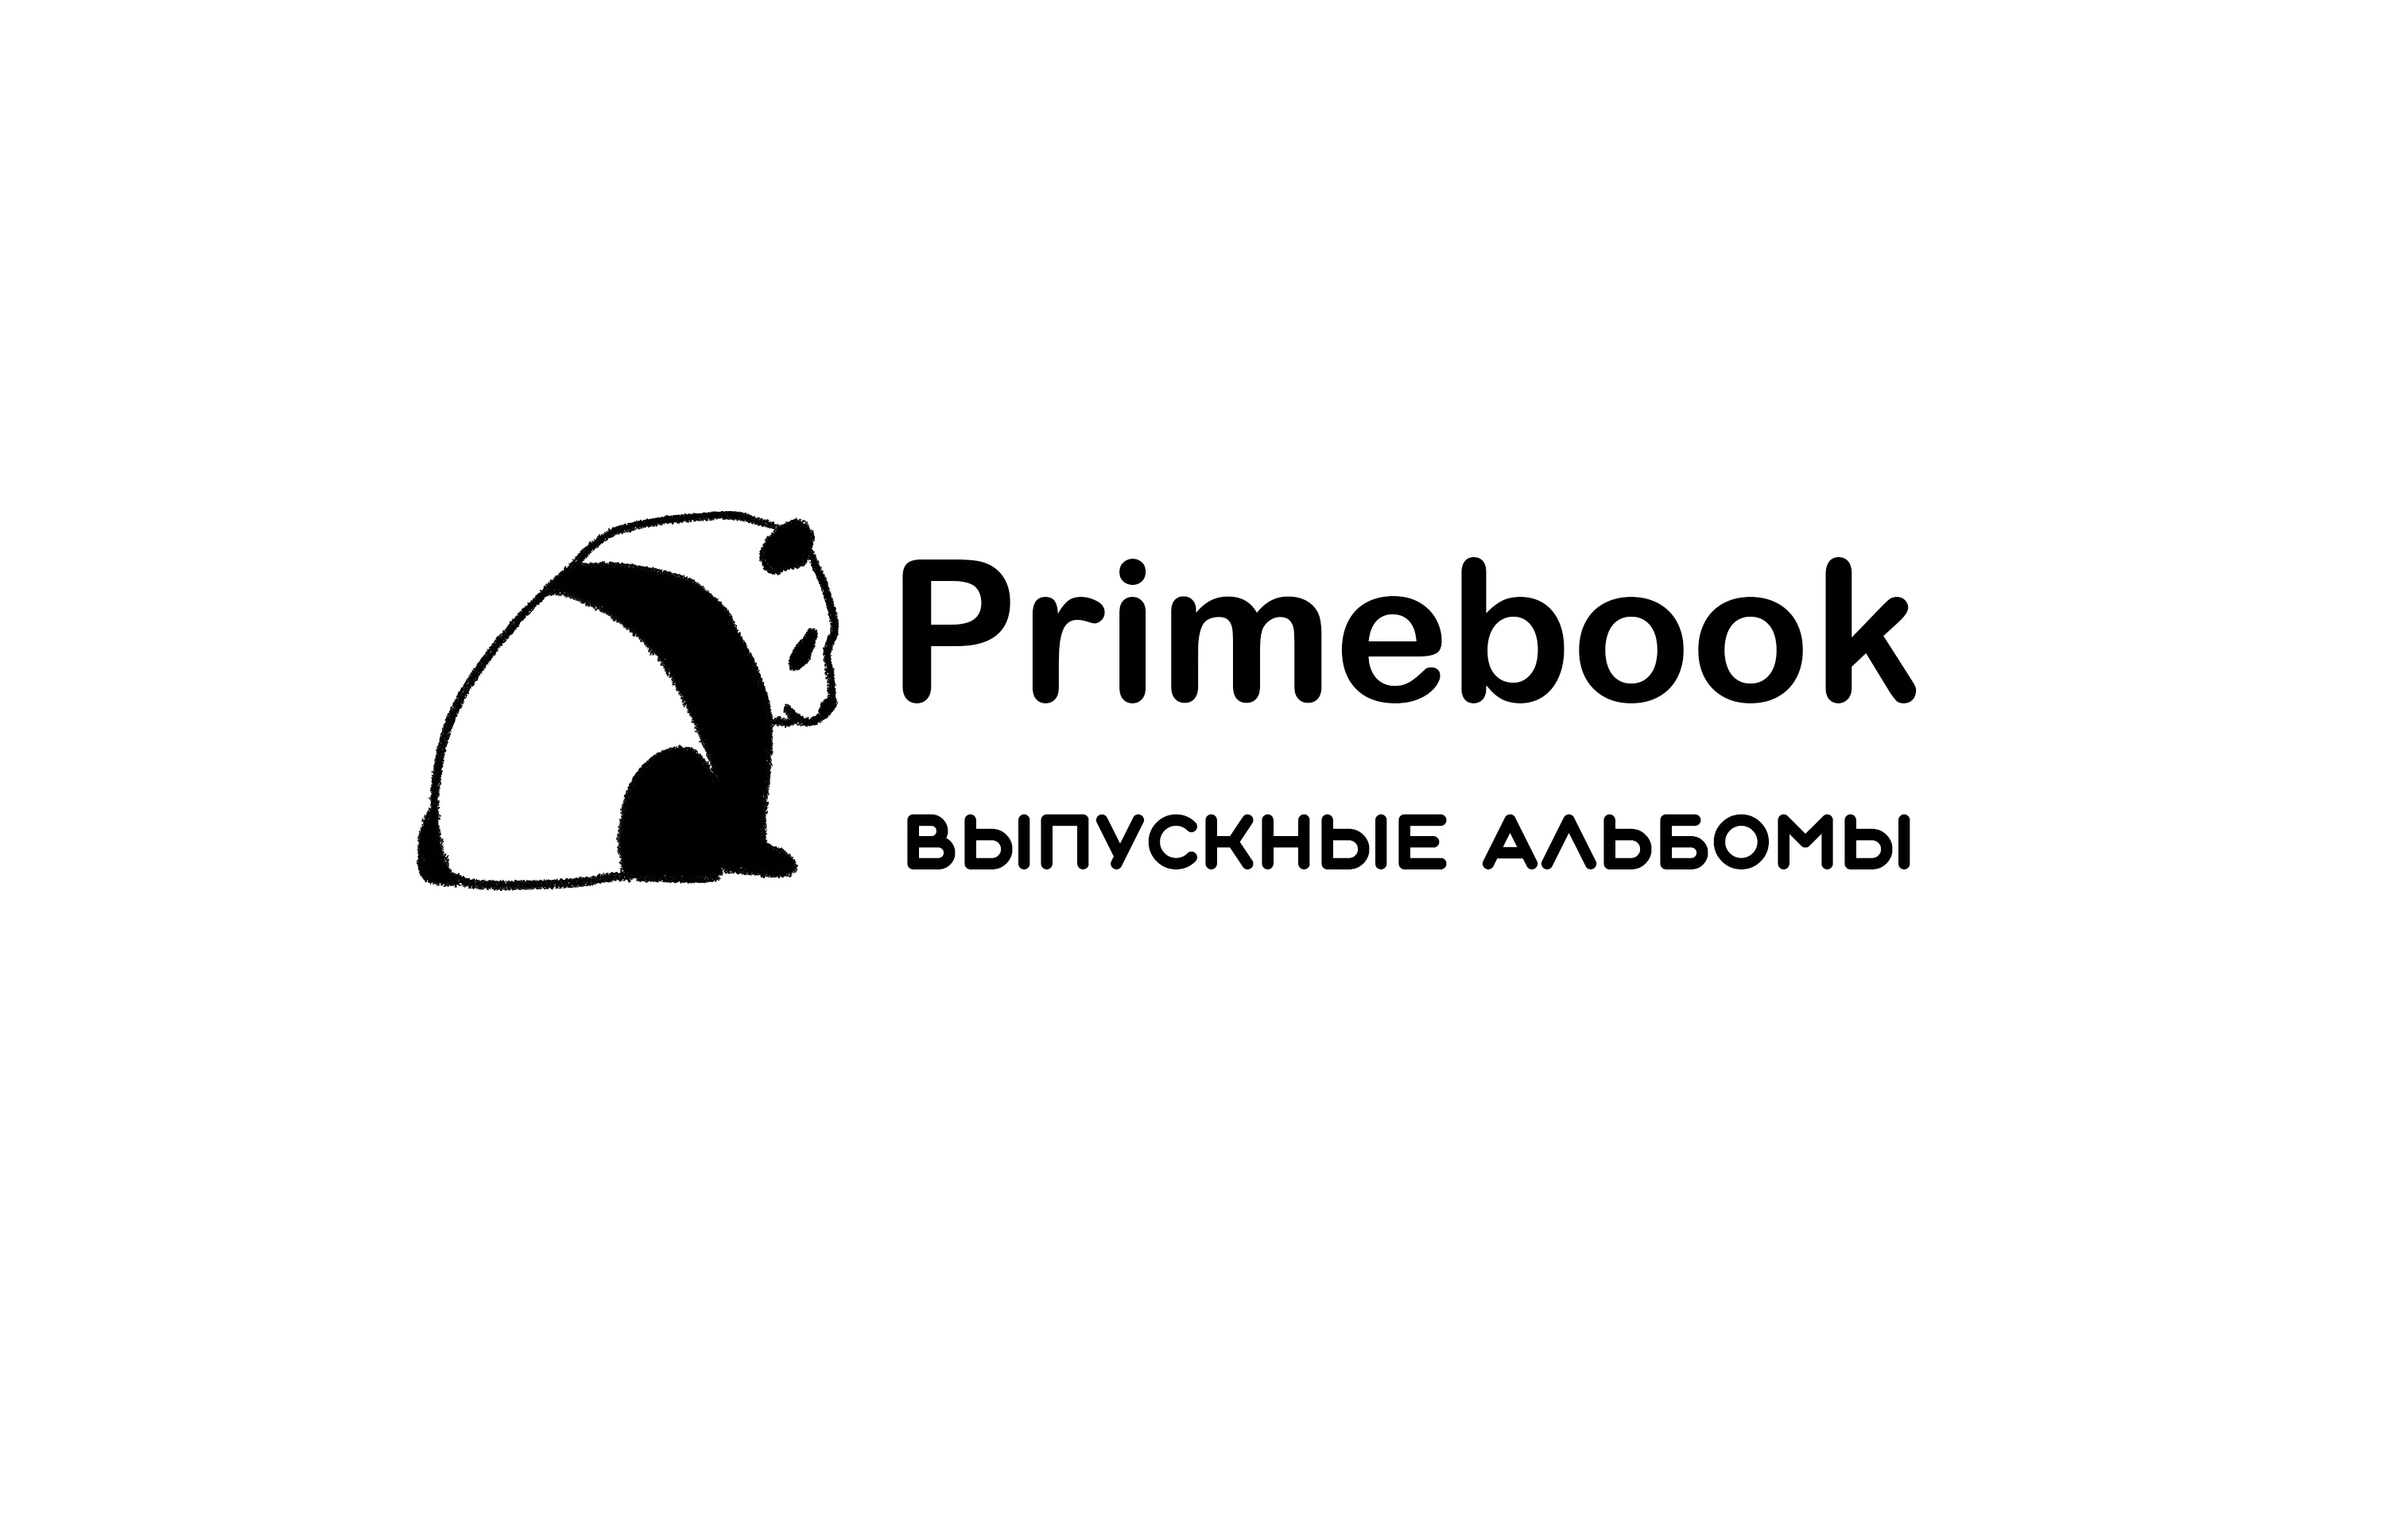 Primebook